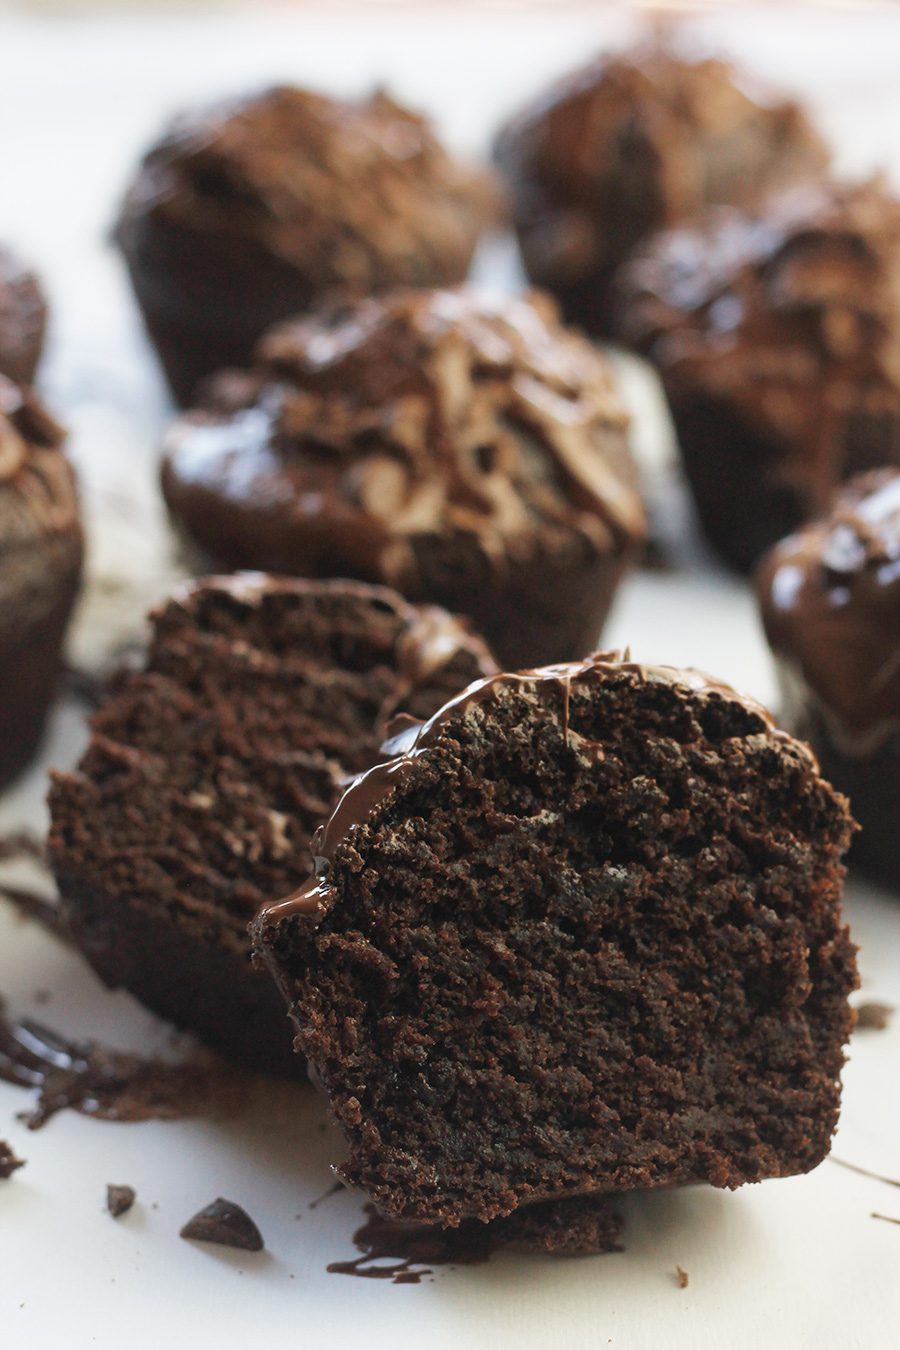 Close-up of chocolate-on-chocolate vegan cupcake cut in half.